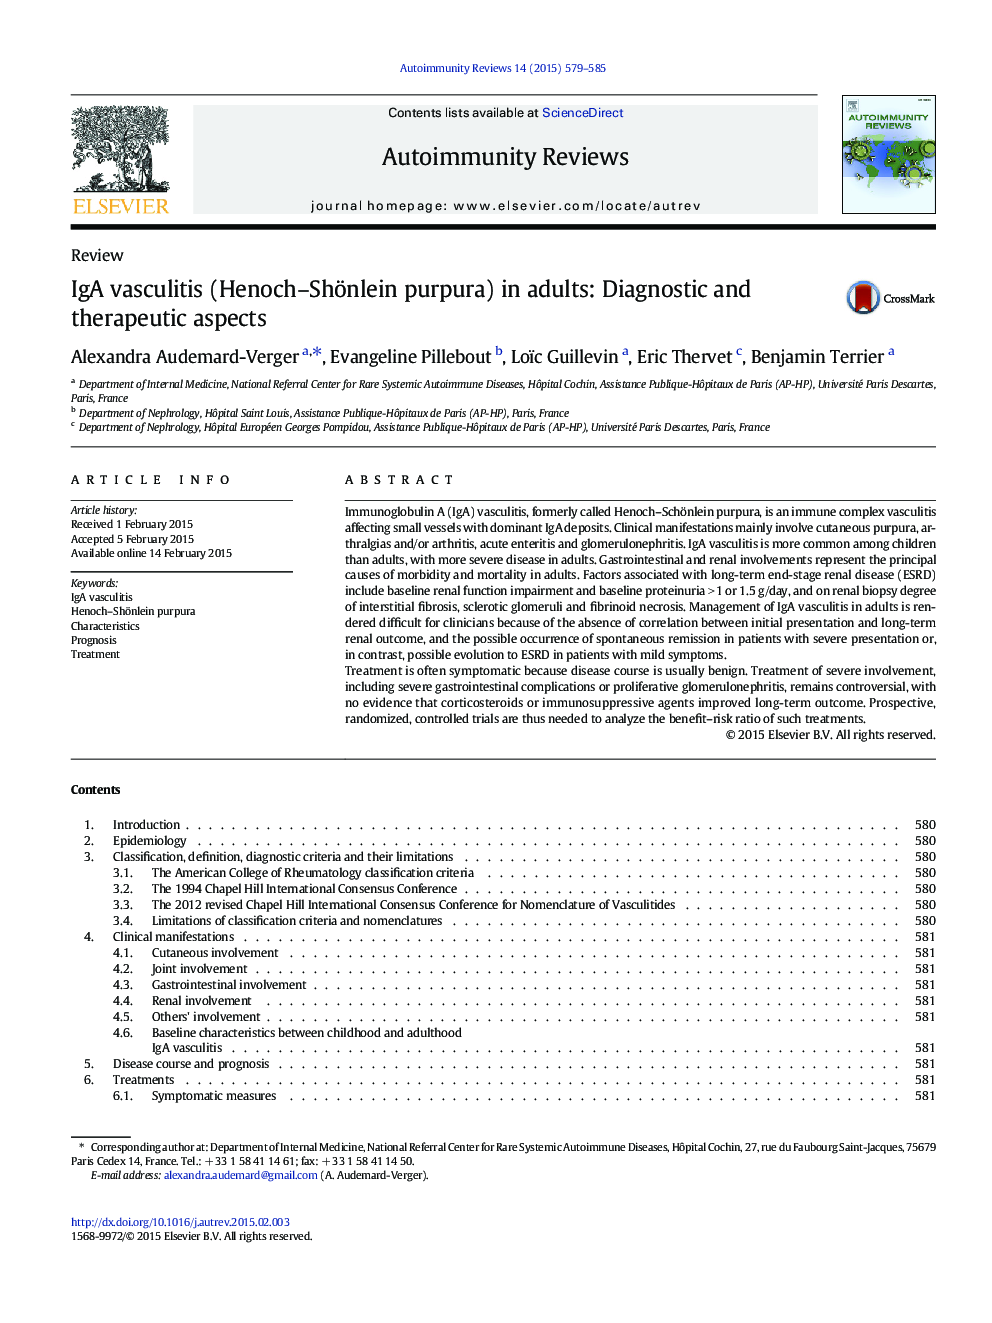 IgA vasculitis (Henoch–Shönlein purpura) in adults: Diagnostic and therapeutic aspects